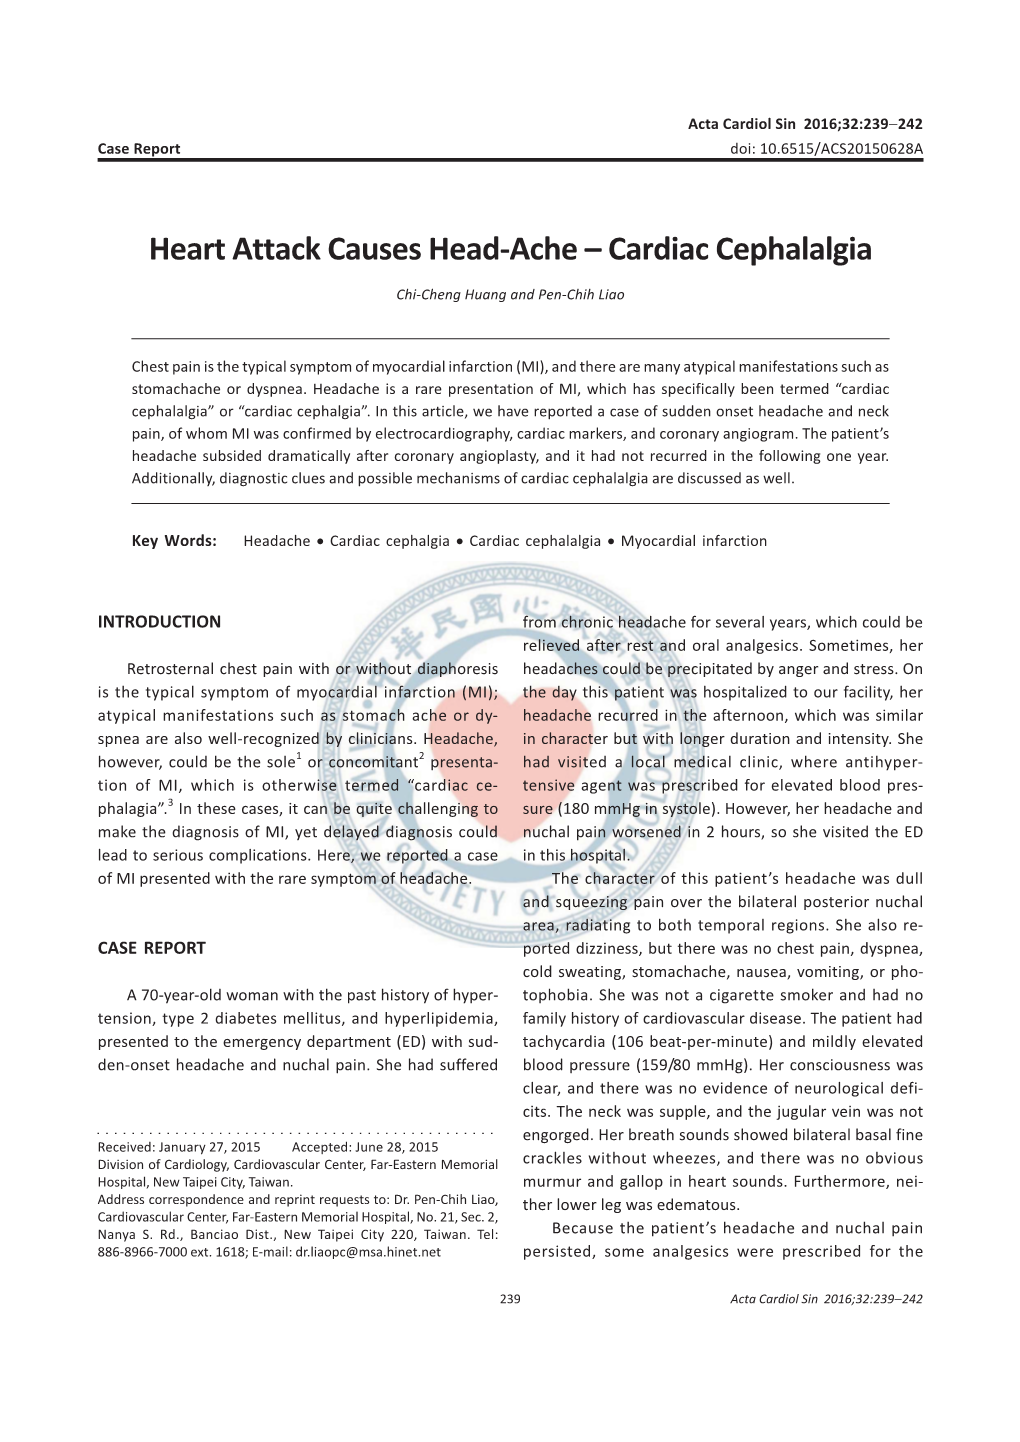 Heart Attack Causes Head-Ache – Cardiac Cephalalgia